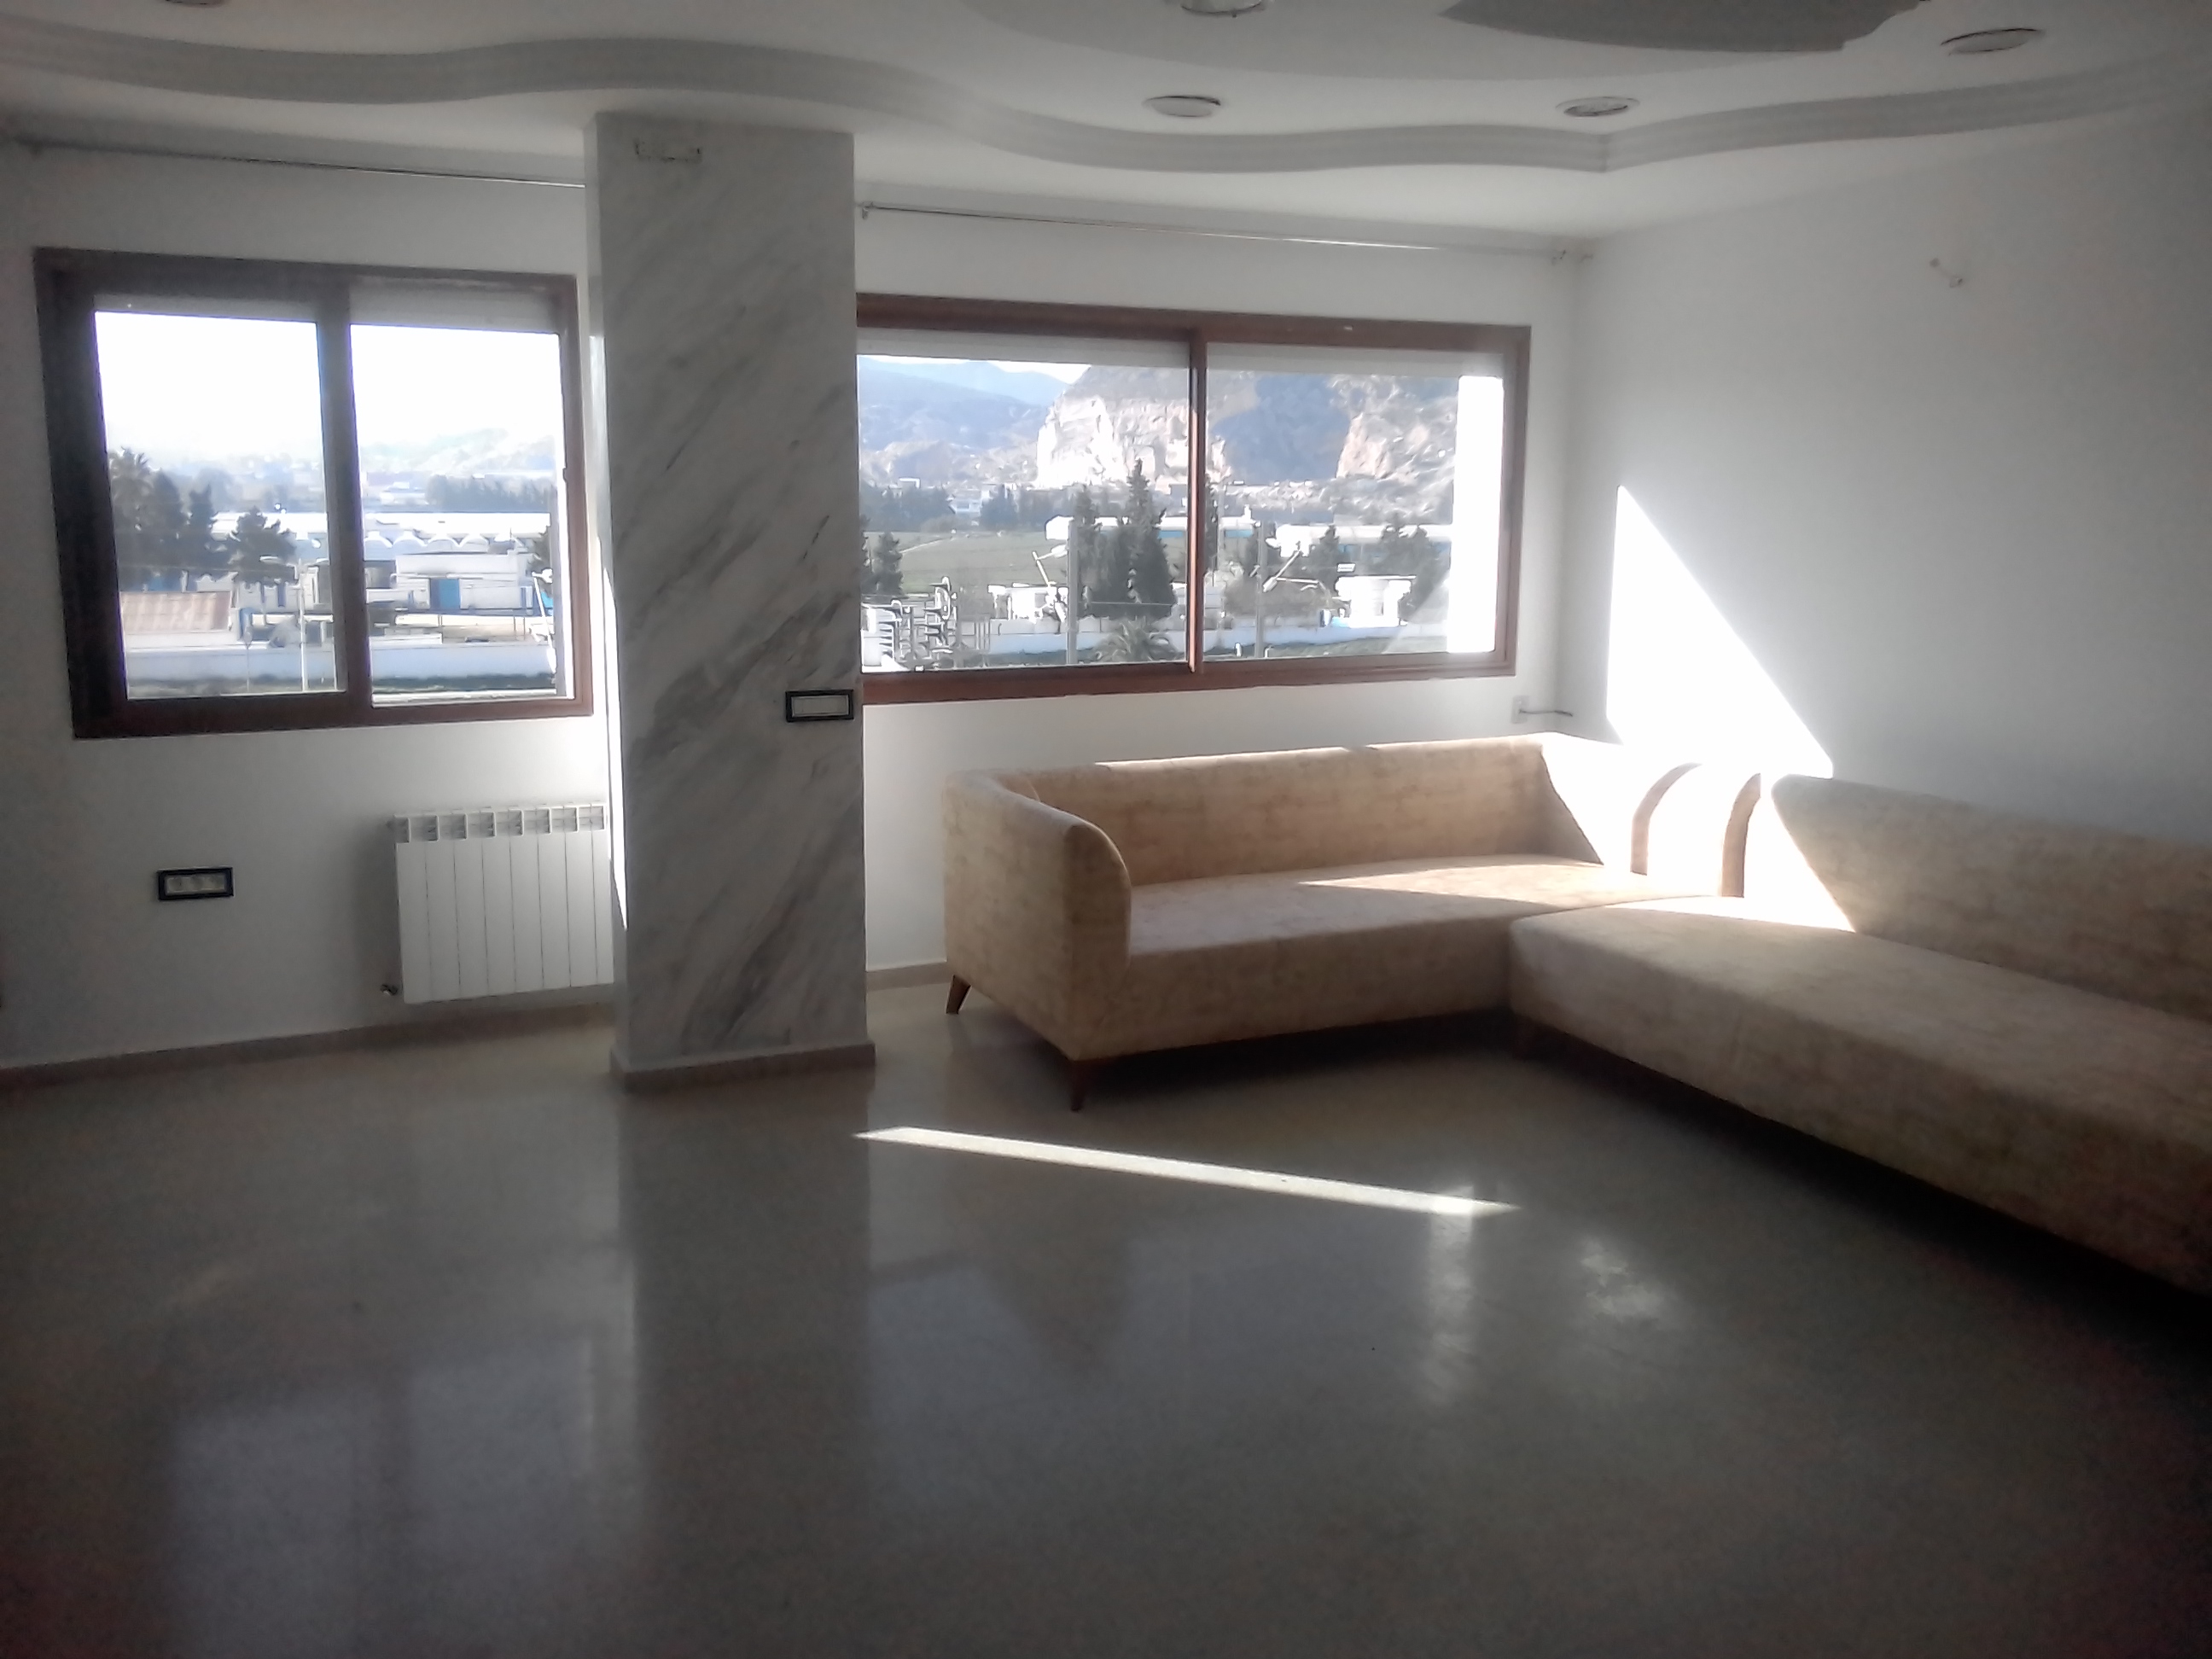 Hammam Chatt Borj Cedria Vente Appart. 4 pices Luxueux  appartement meubler